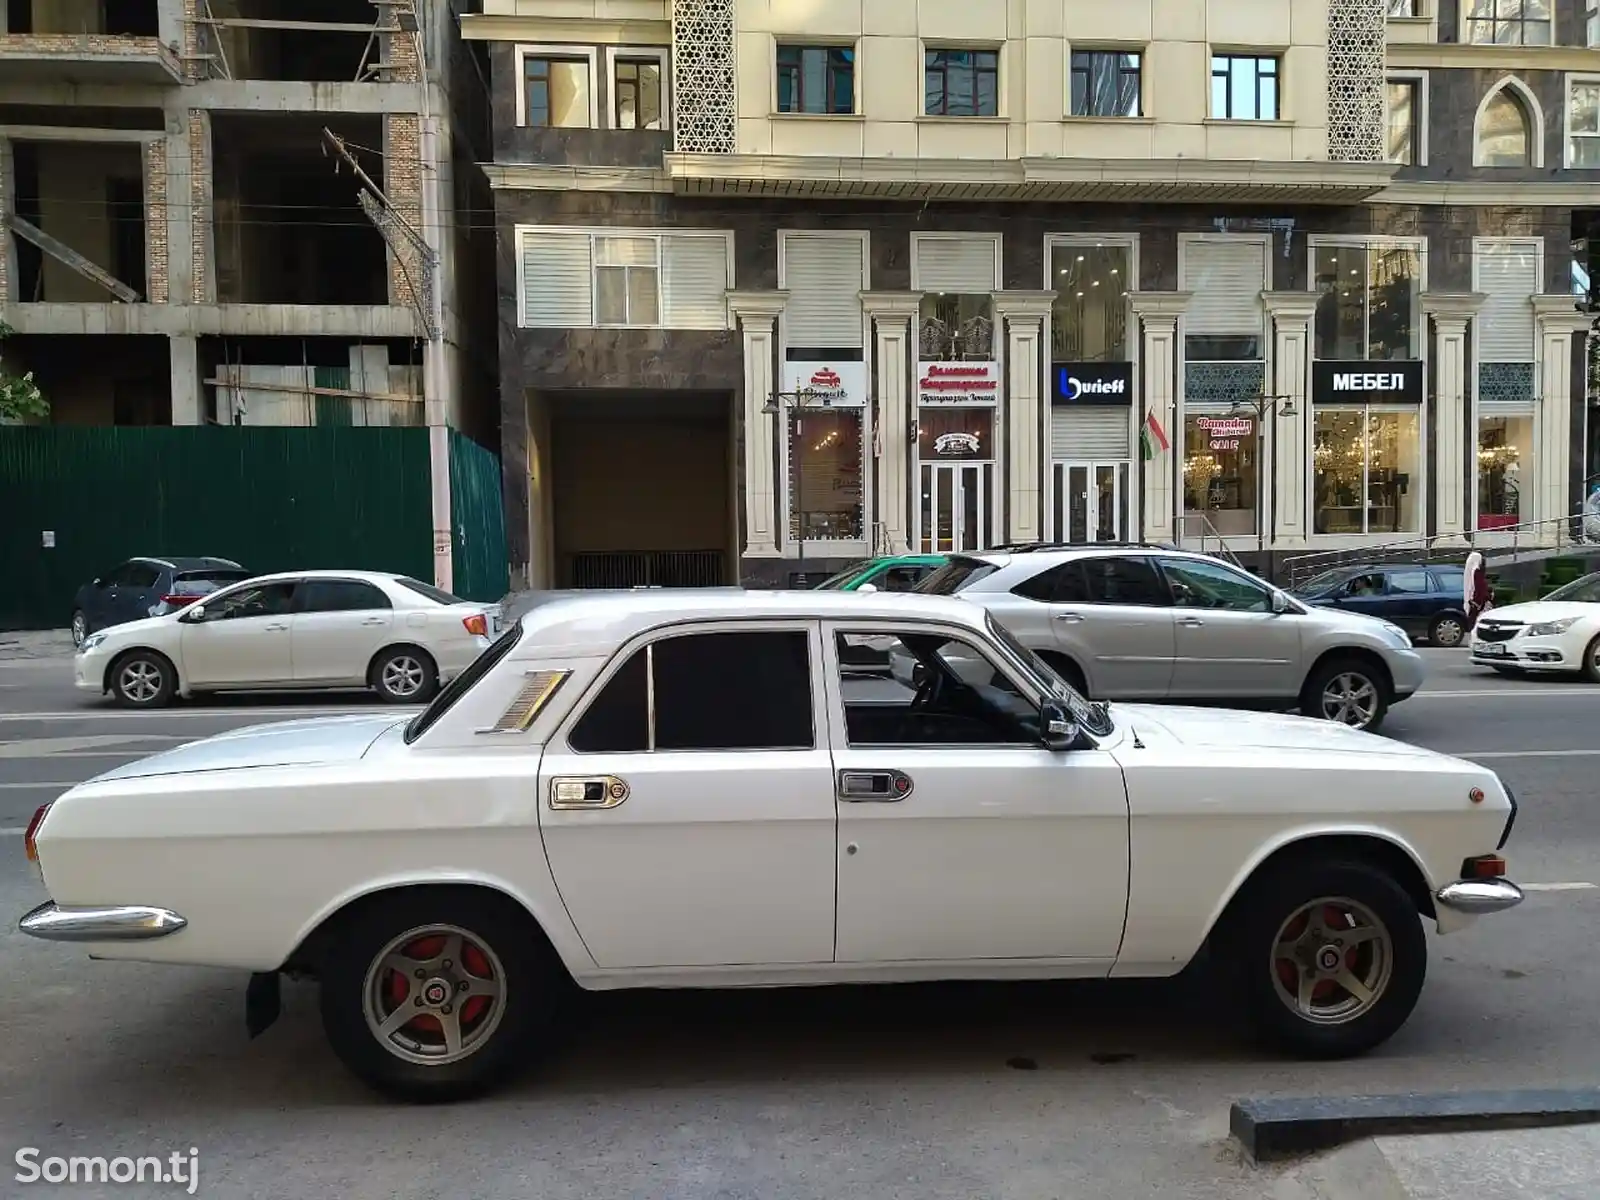 ГАЗ 2410, 1988-1